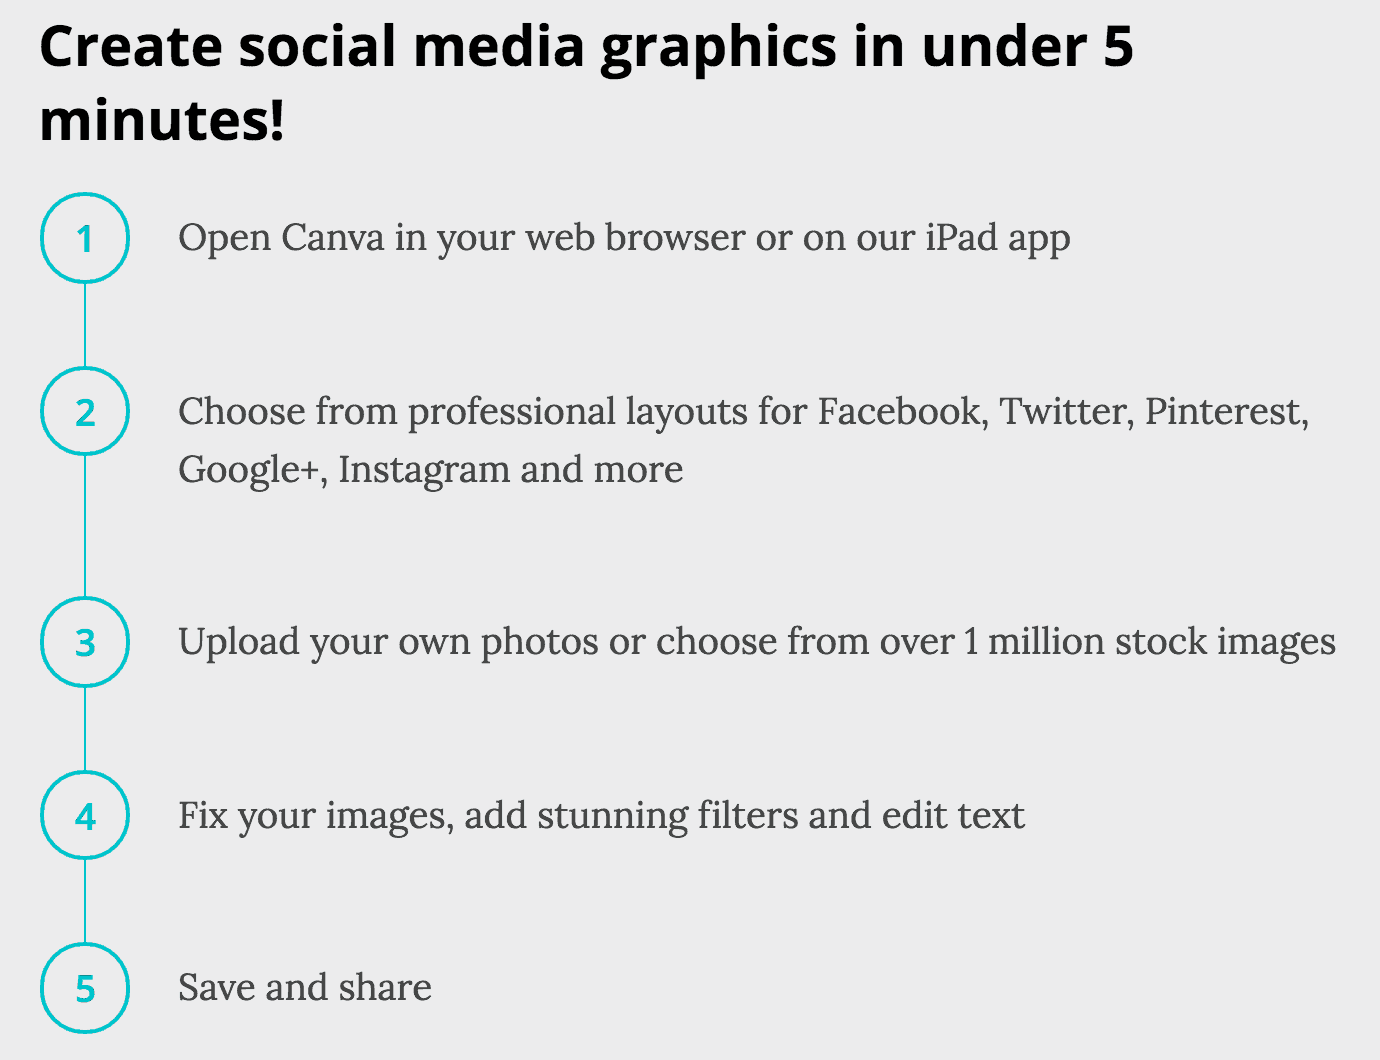 Create social media graphics using Canva design tools in under 5 minutes!